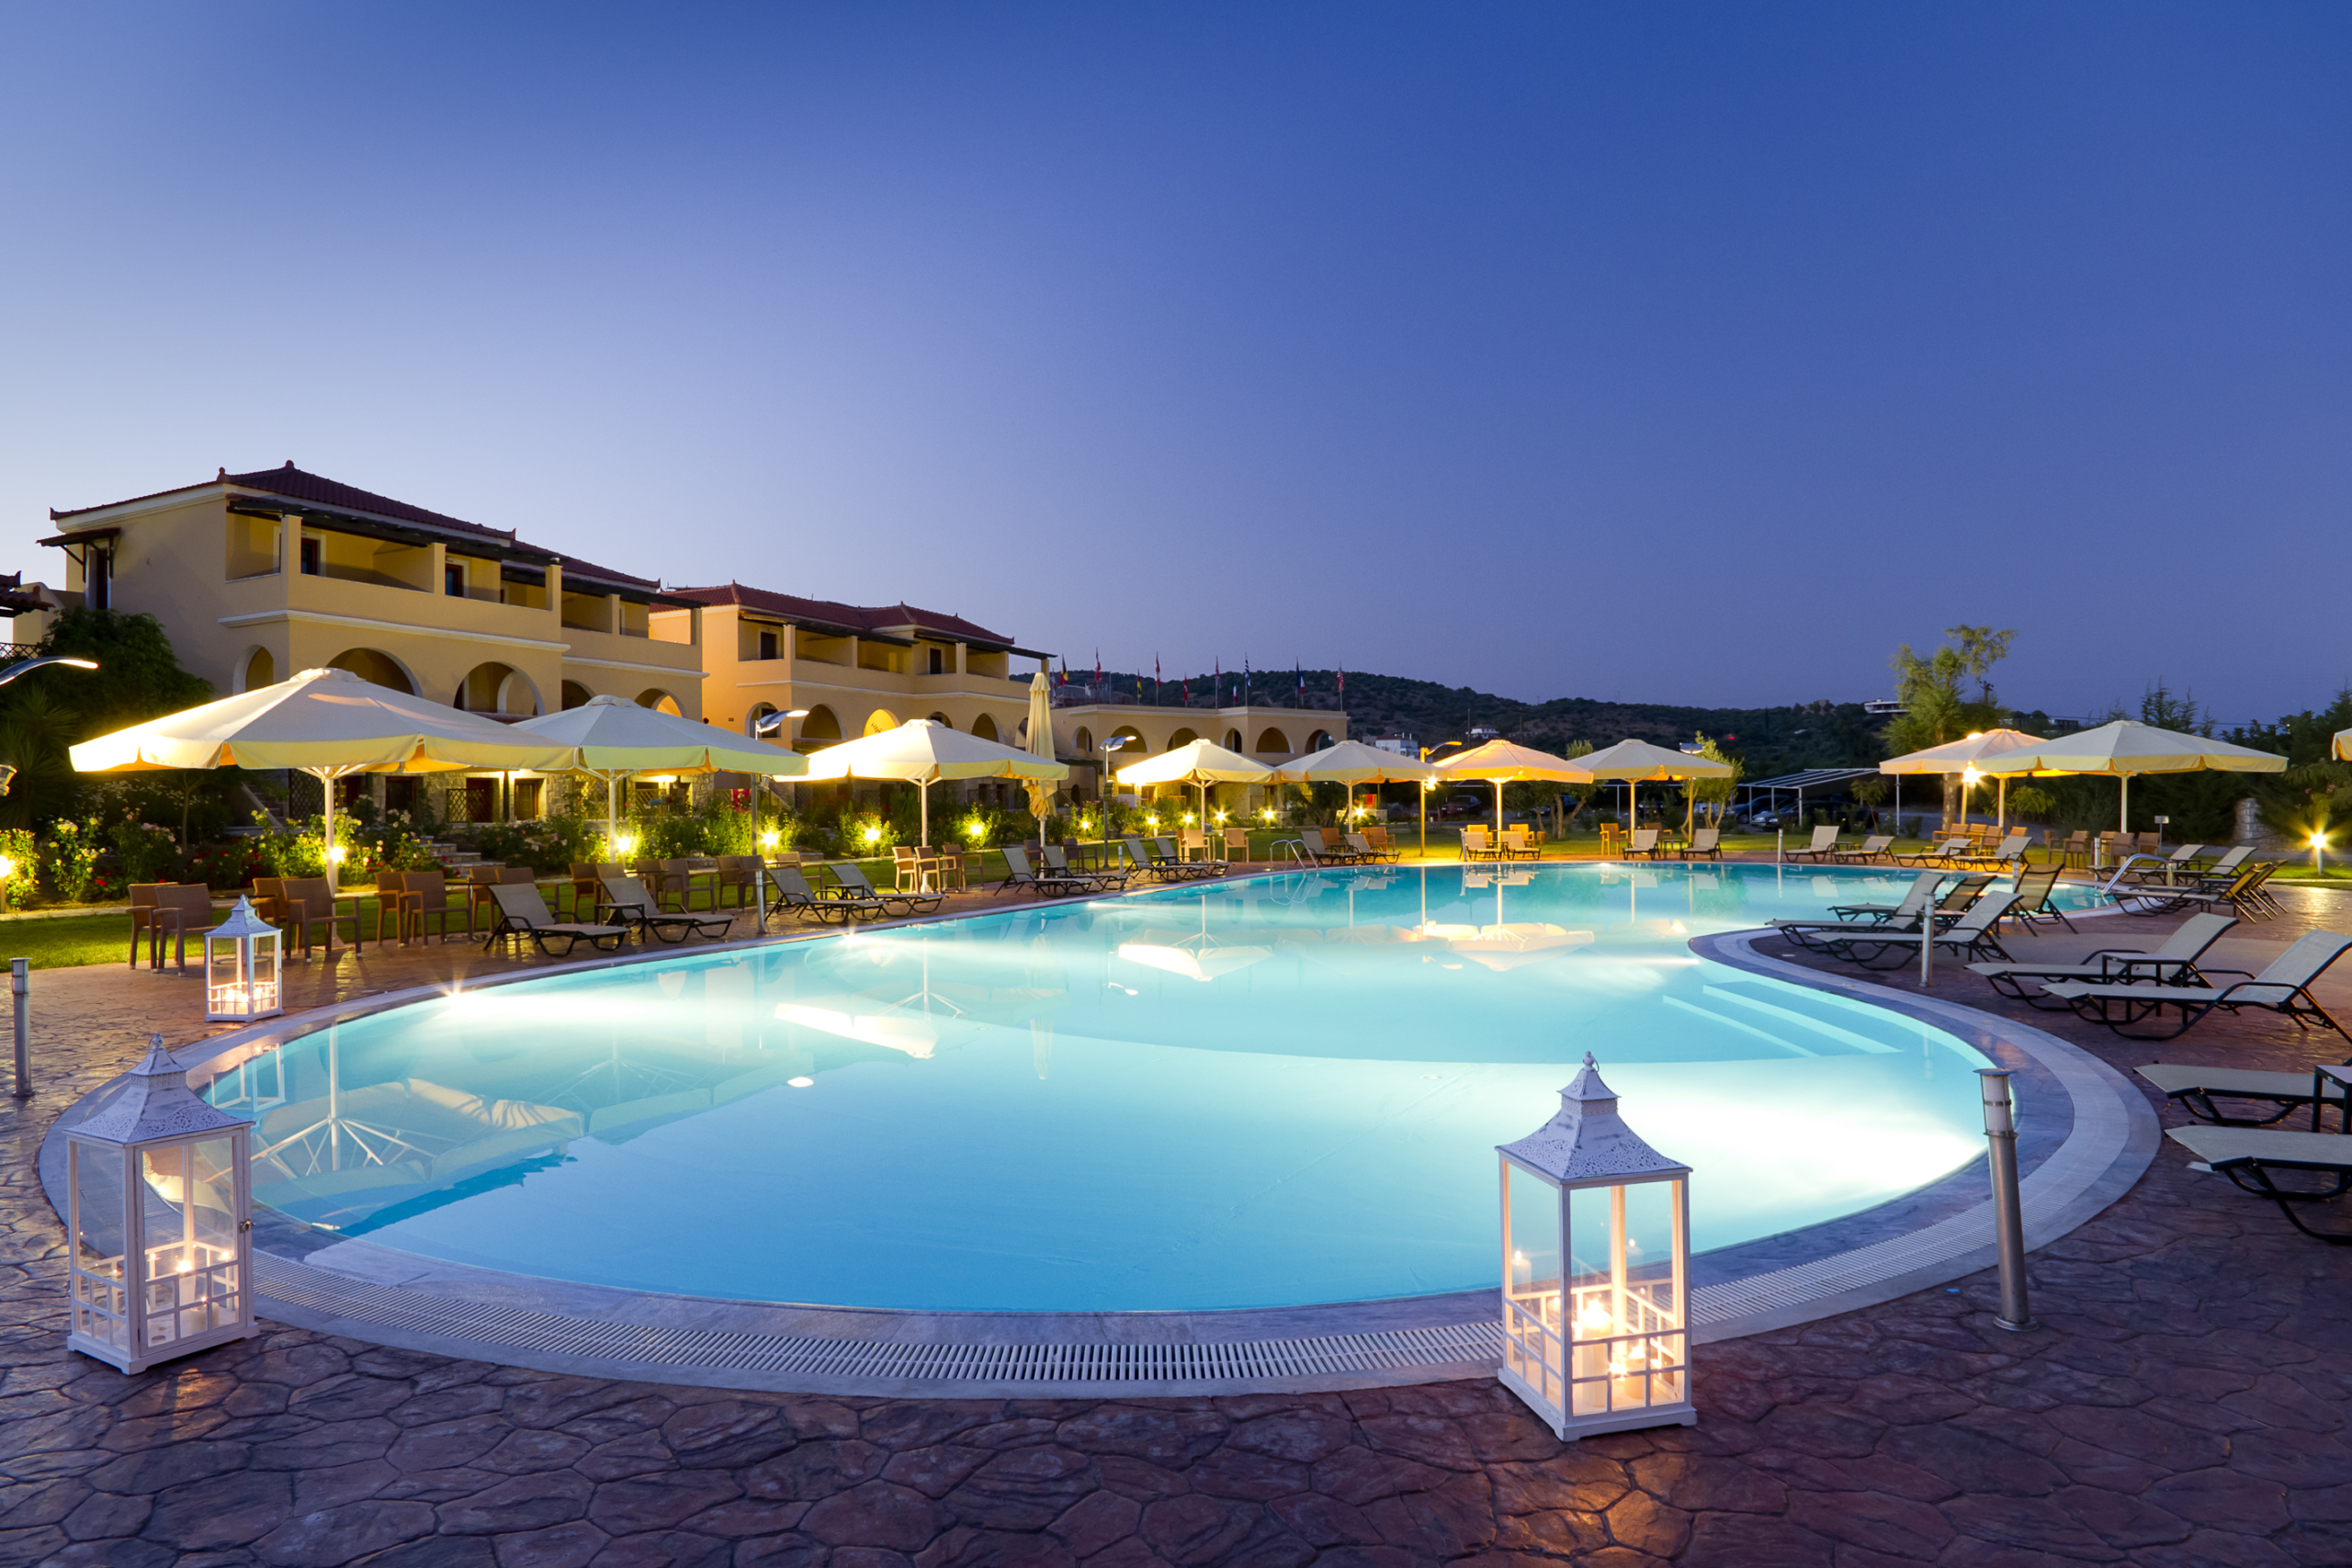 Hotel resort swimming pool